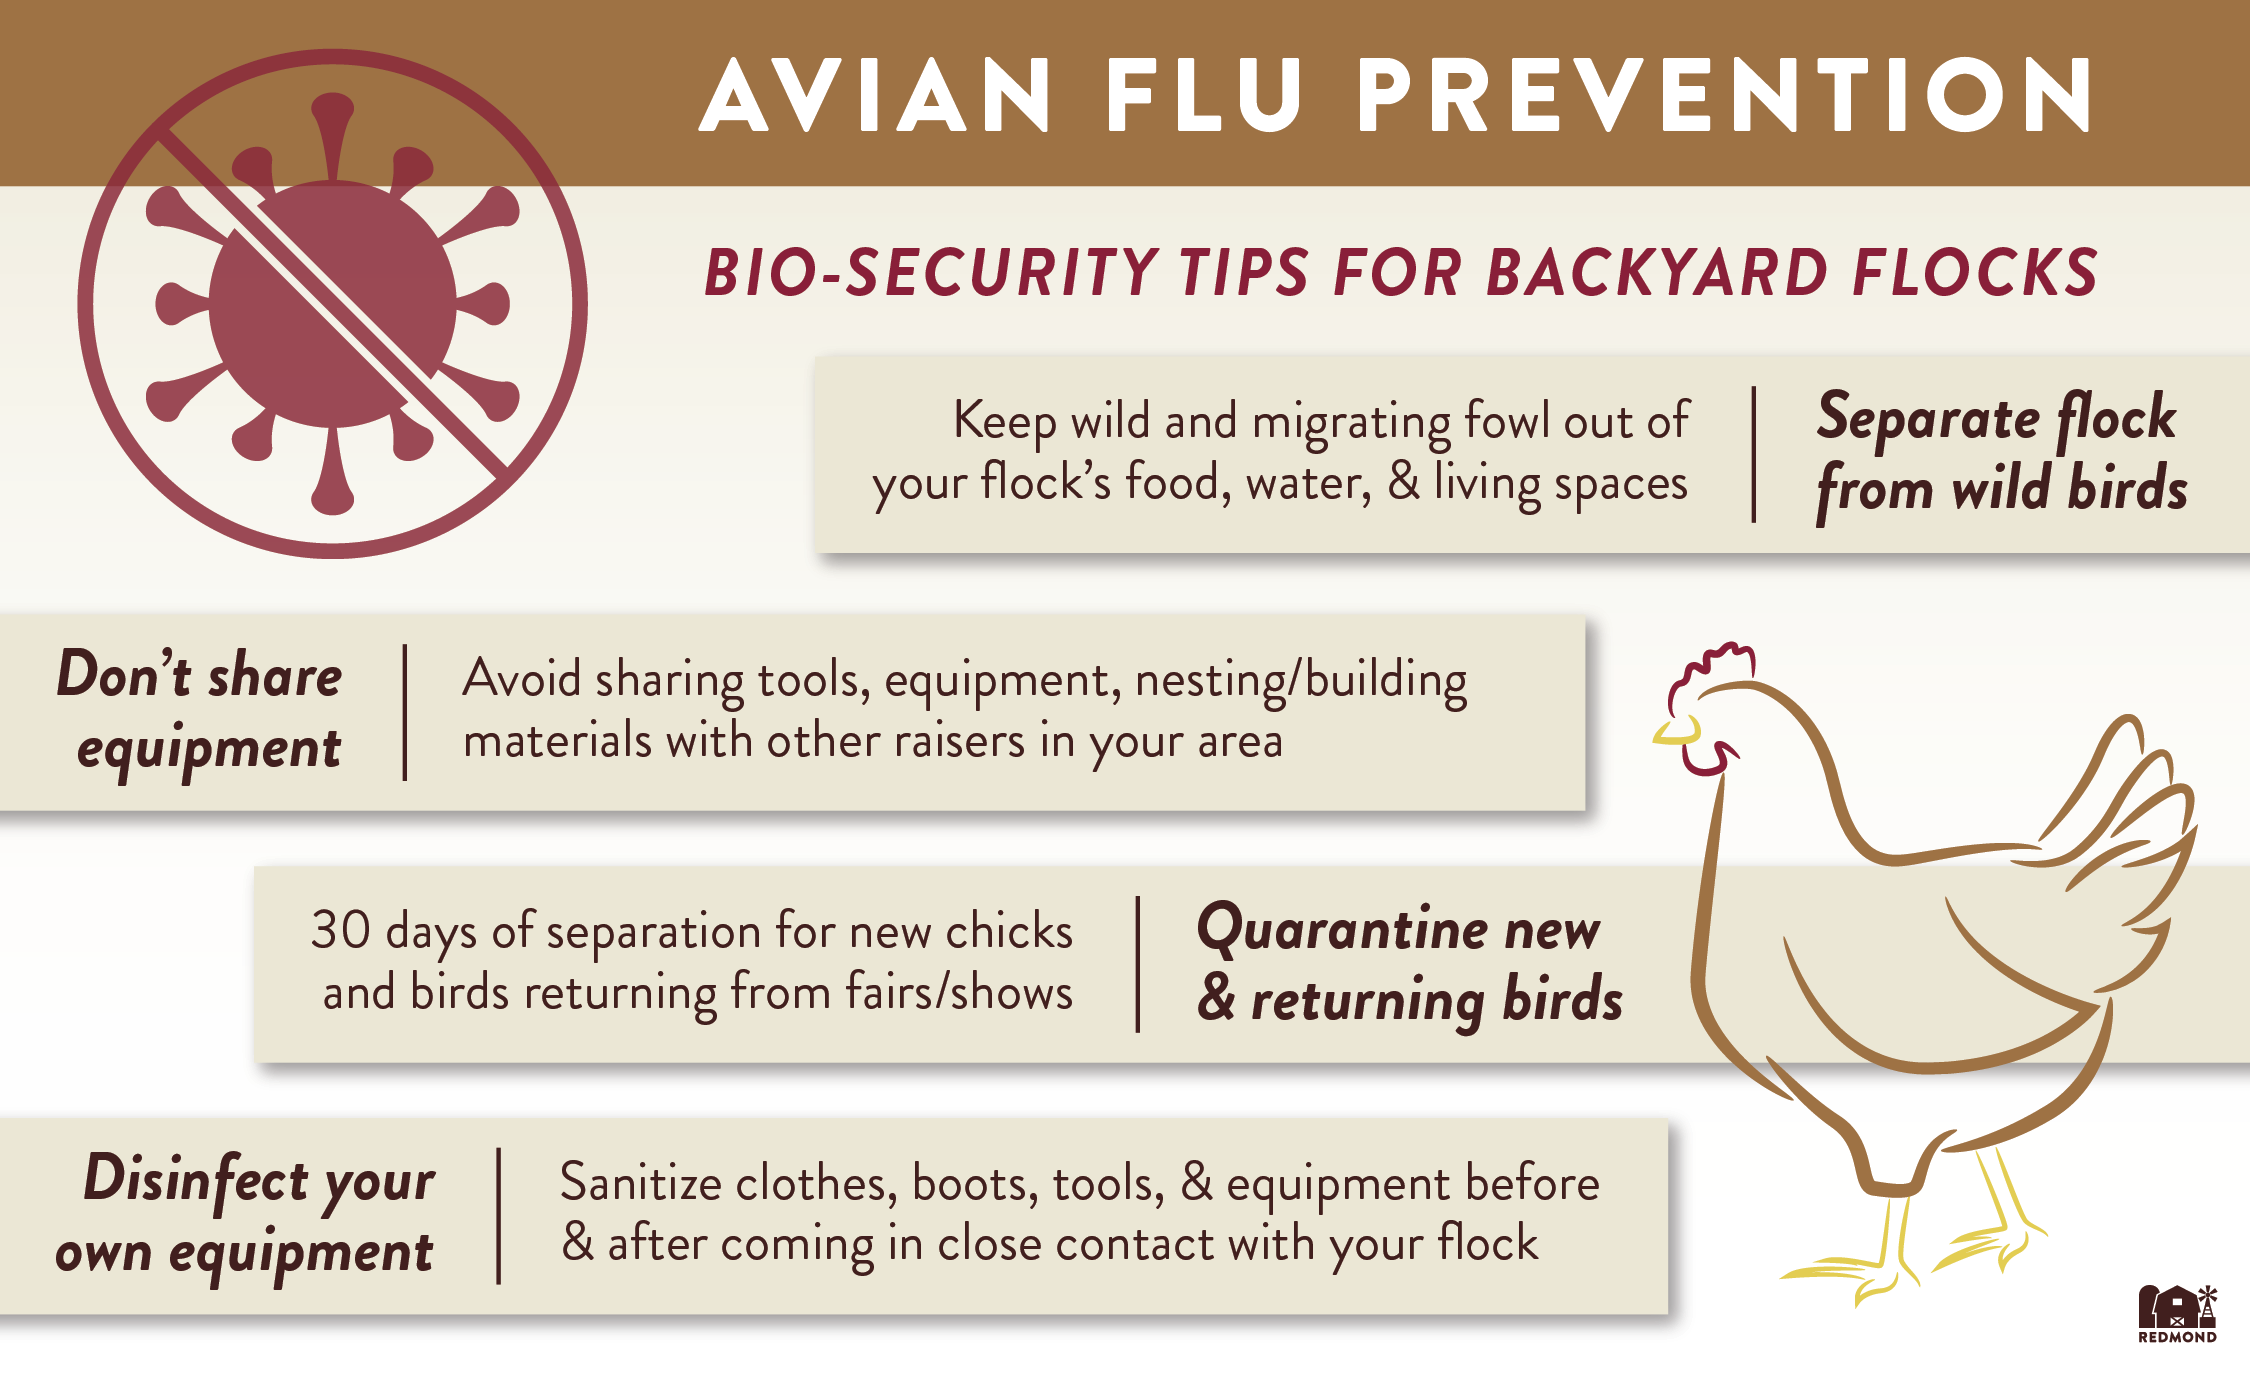 Avian Flu prevention bio-security tips for backyard flocks